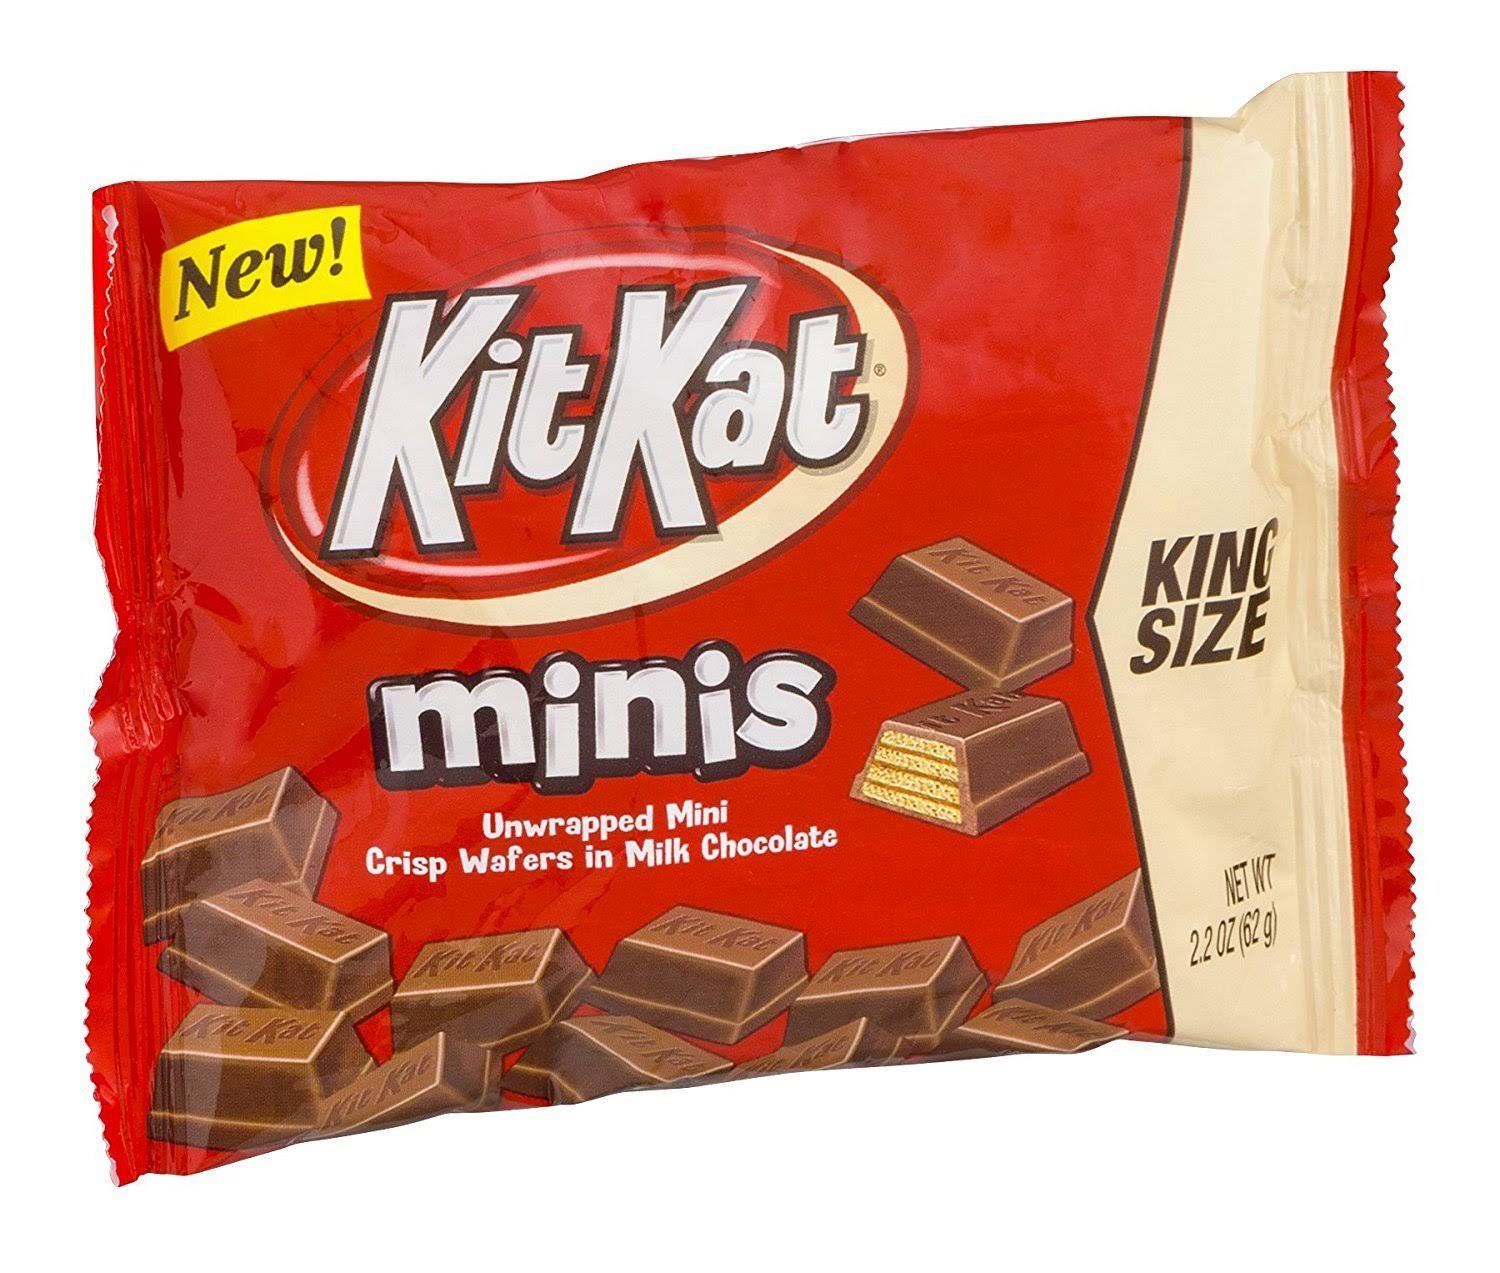 Kit Kat Minis King Size Candy Bars - 2.2oz